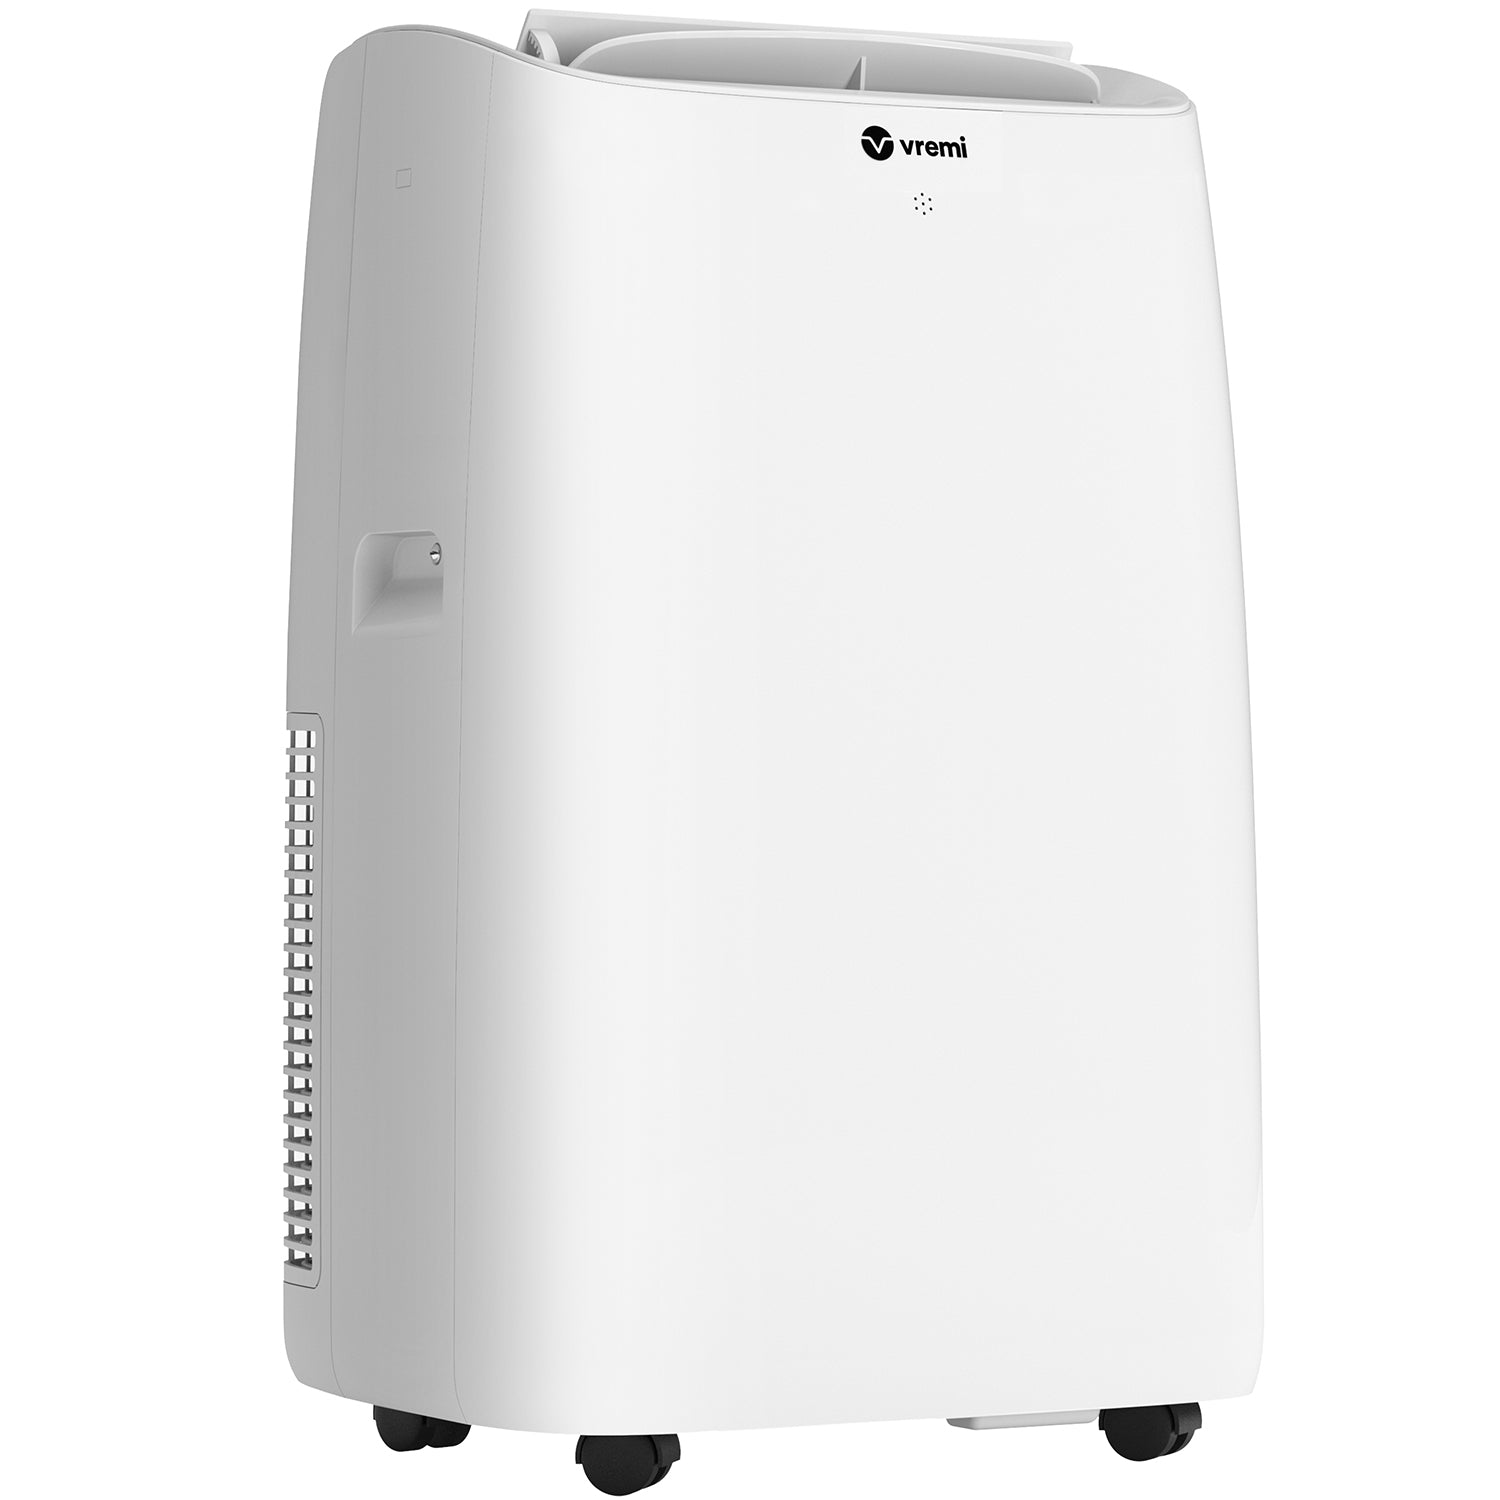 Portable Air Conditioner - 12,000 BTU